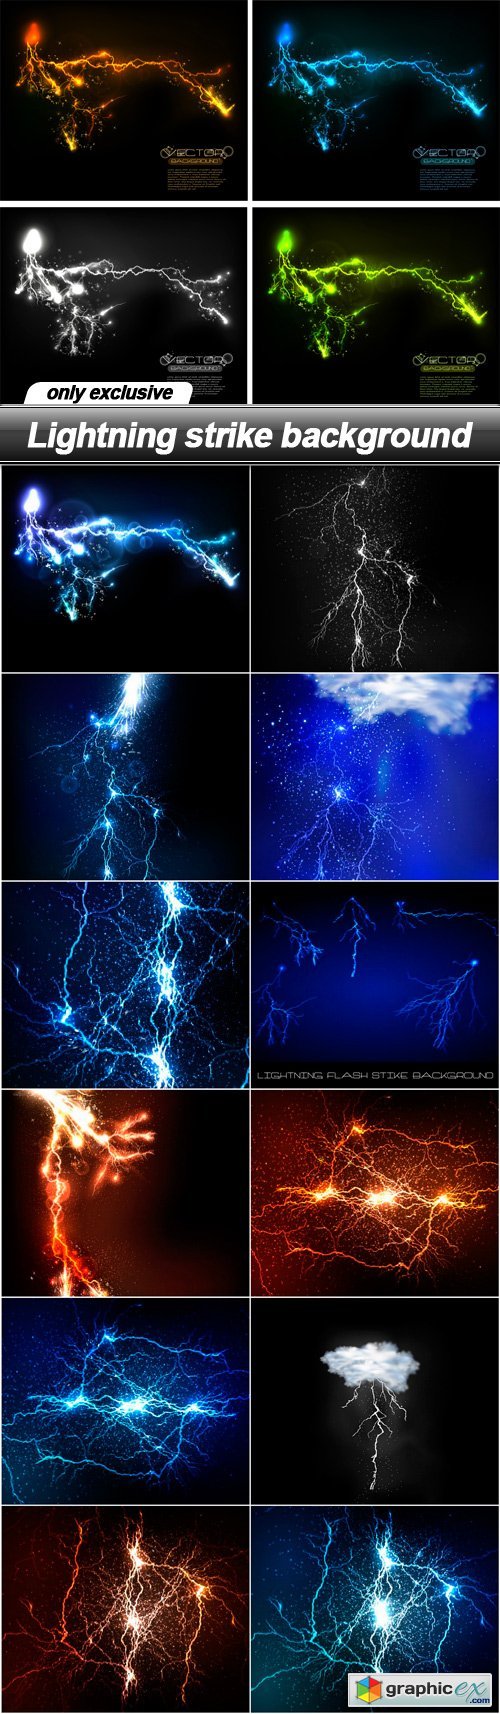 Lightning strike background - 13 EPS